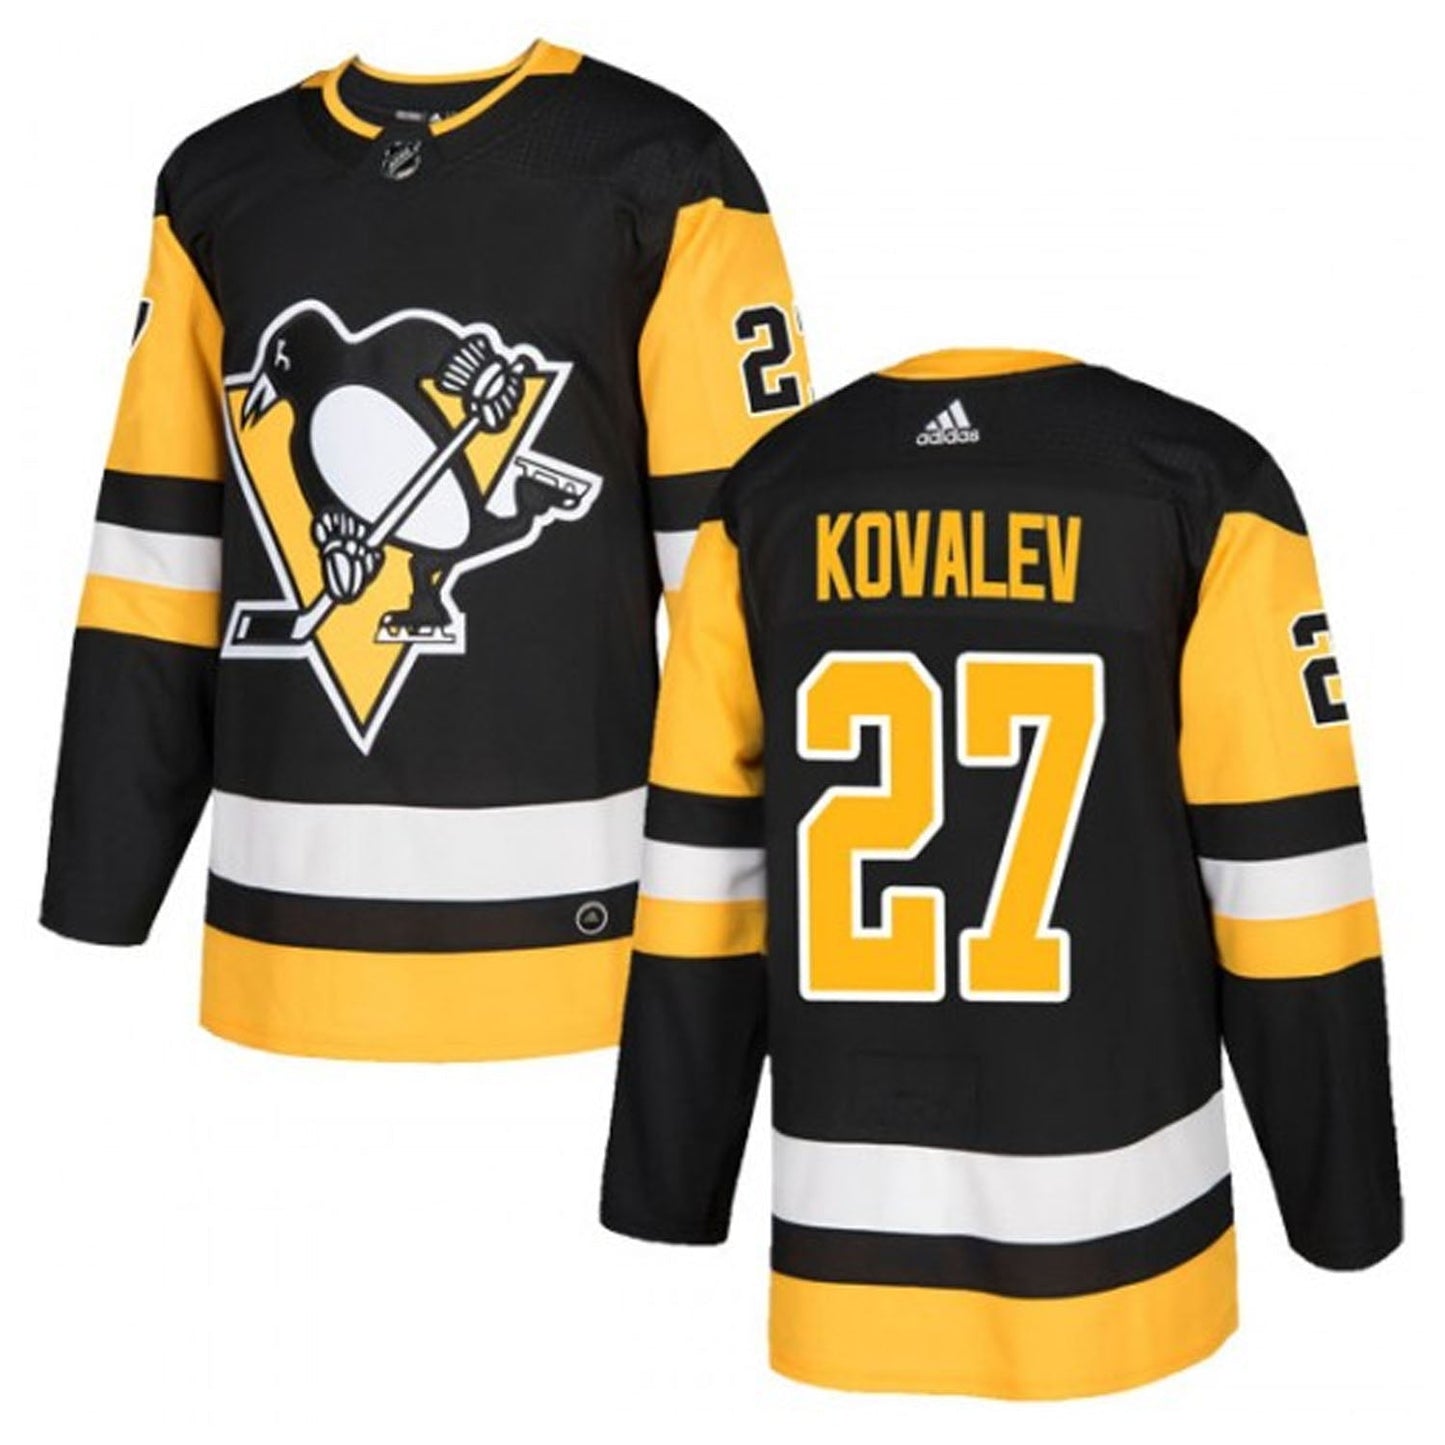 NHL Alexei Kovalev Pittsburgh Penguins 27 Jersey